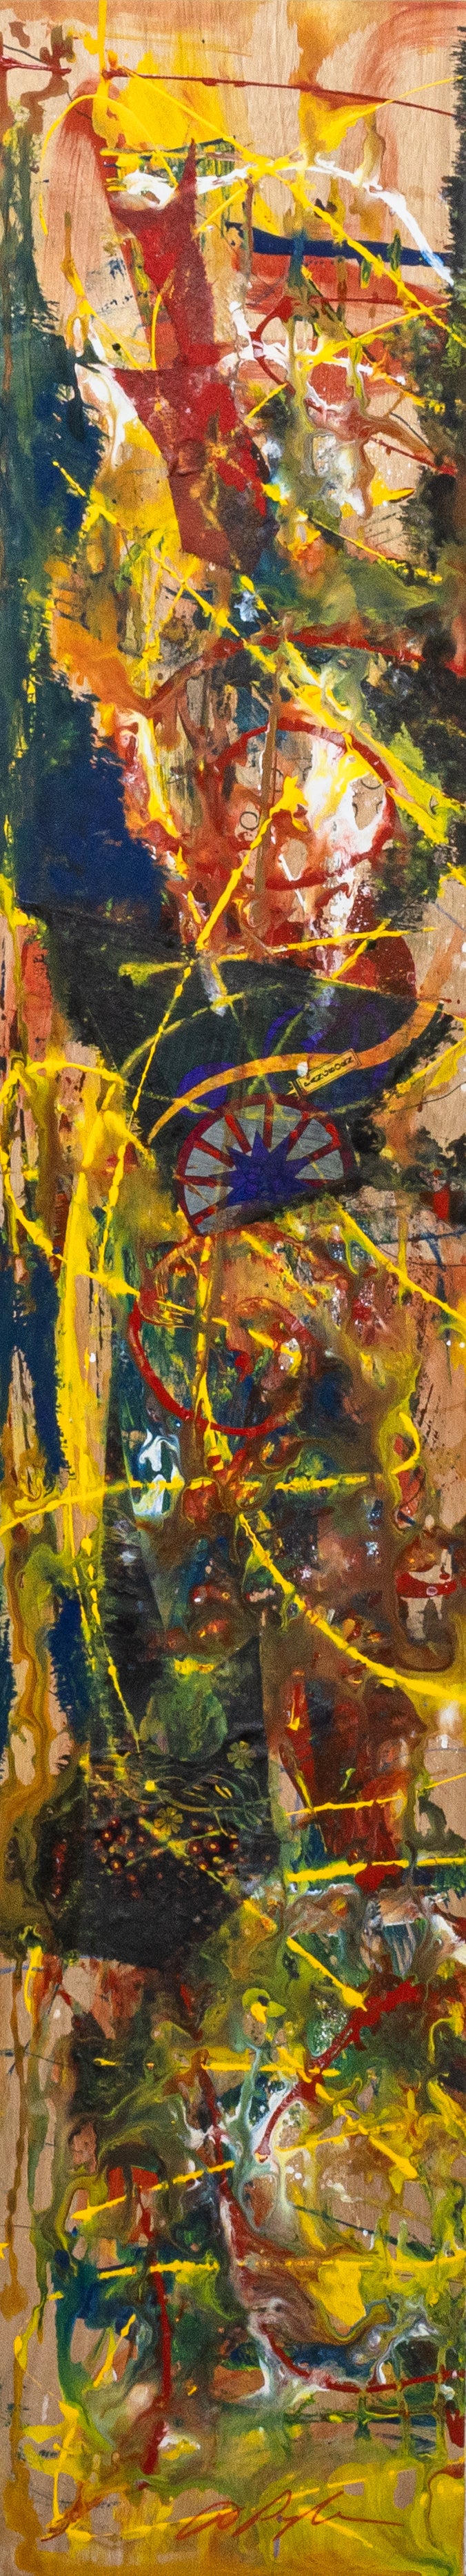 Dominic Pangborn Abstract Splatter II: An Homage to Pollock Painting